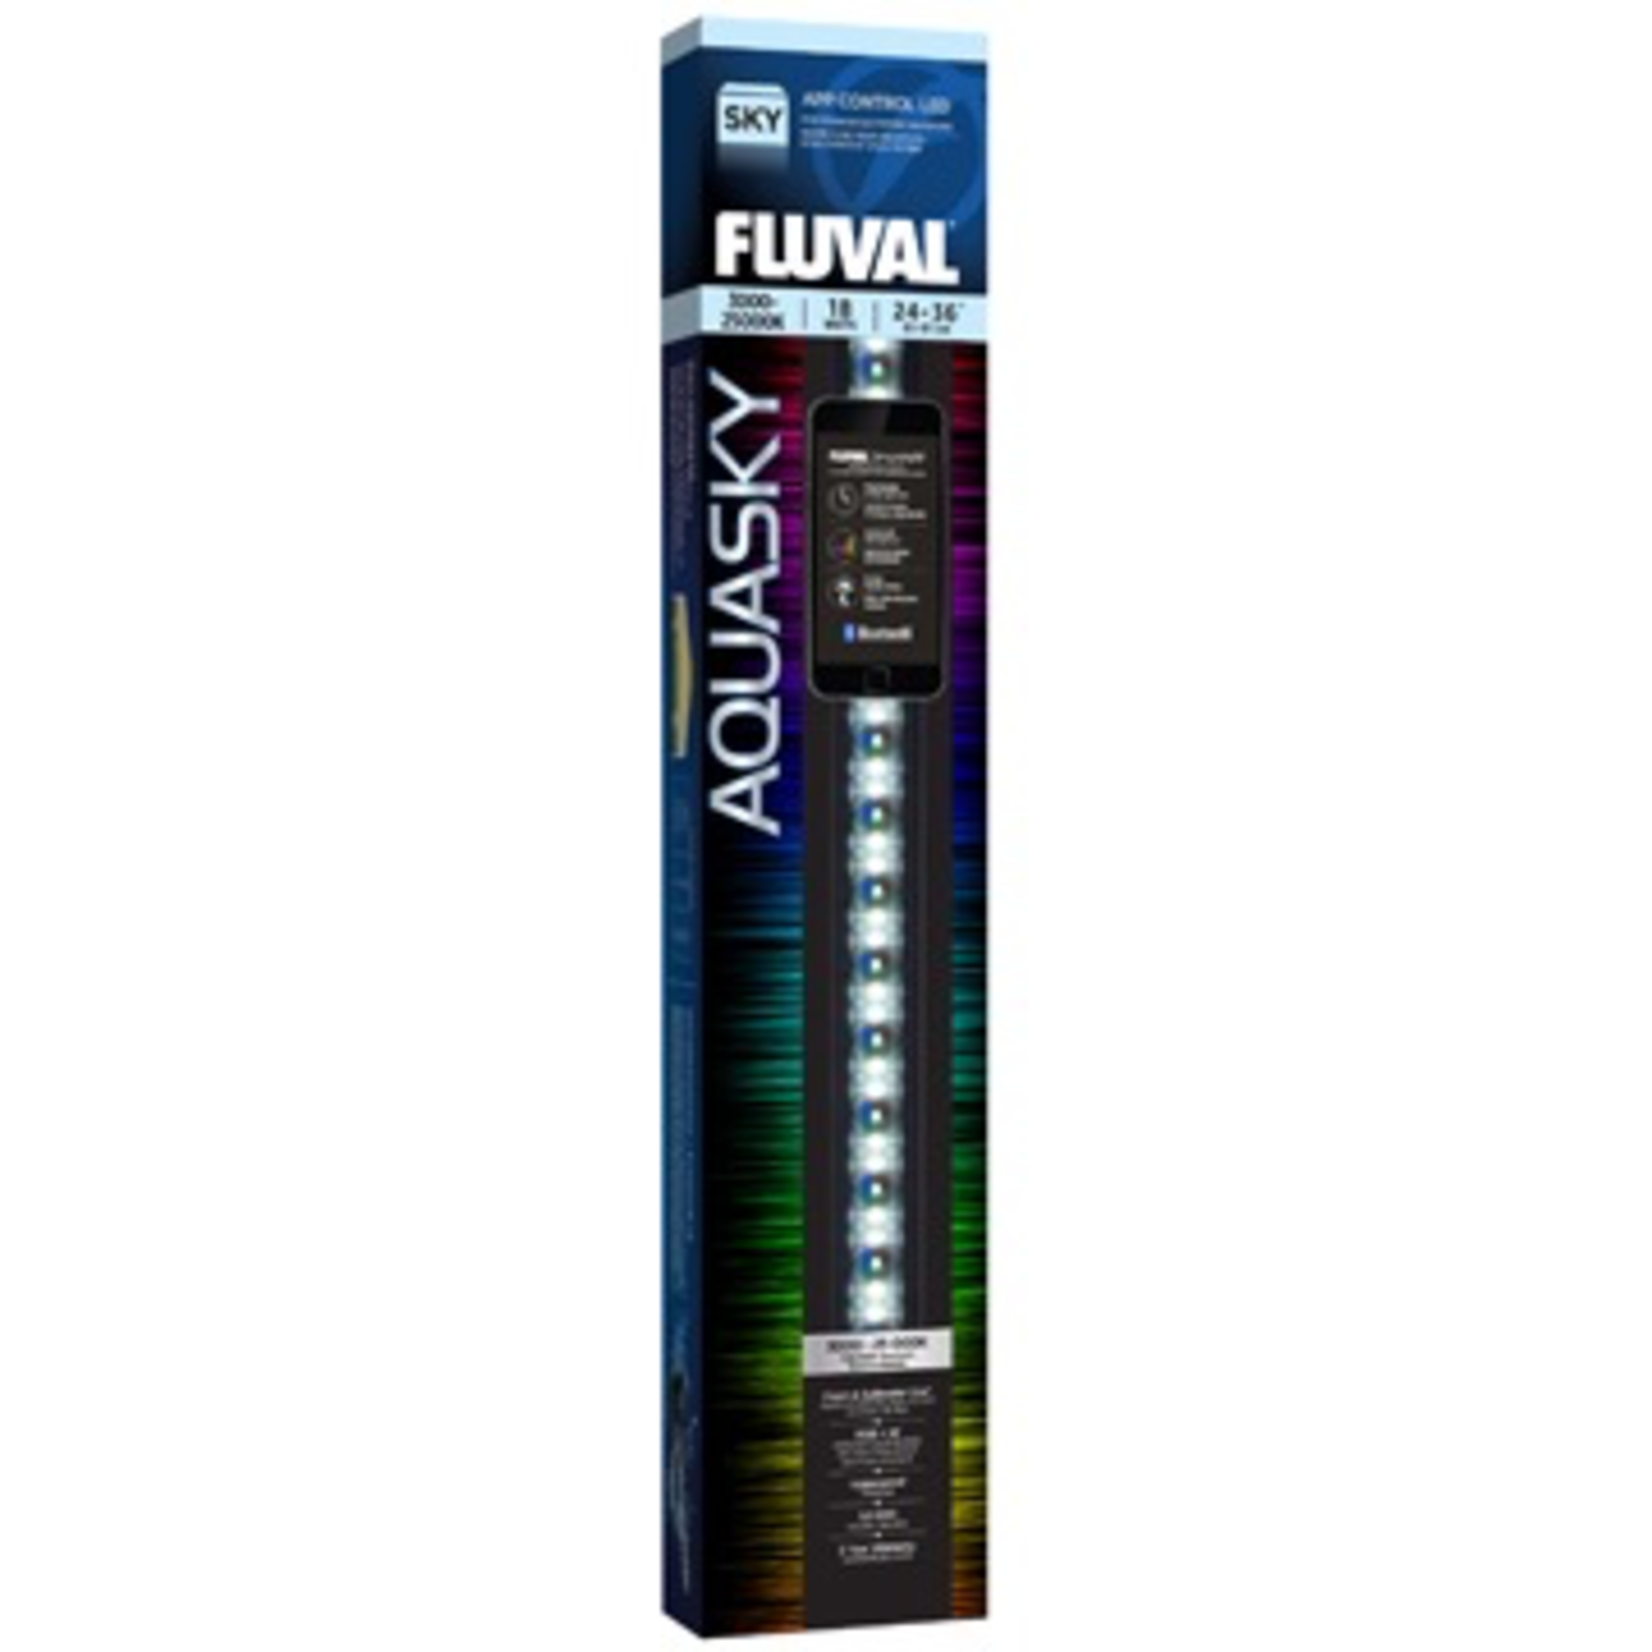 FLUVAL (W) FL Aquasky 2.0 Bluetooth LED 24-36”/ 61-91cm-18 watt